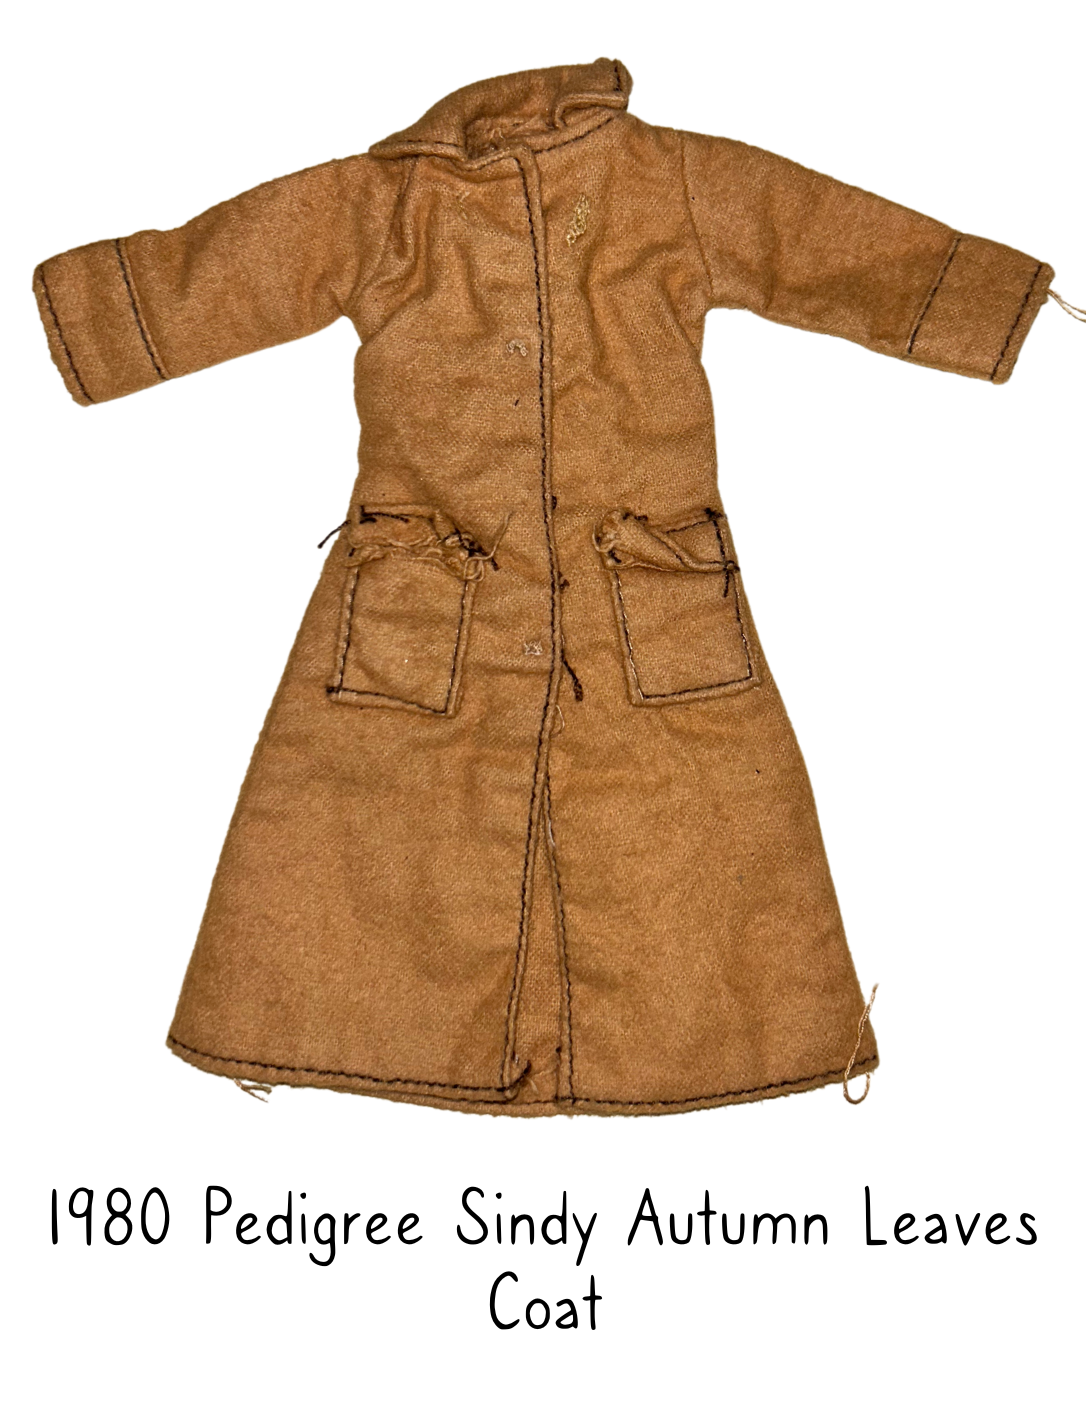 1980 Pedigree Sindy Fashion Doll Autumn Leaves Coat